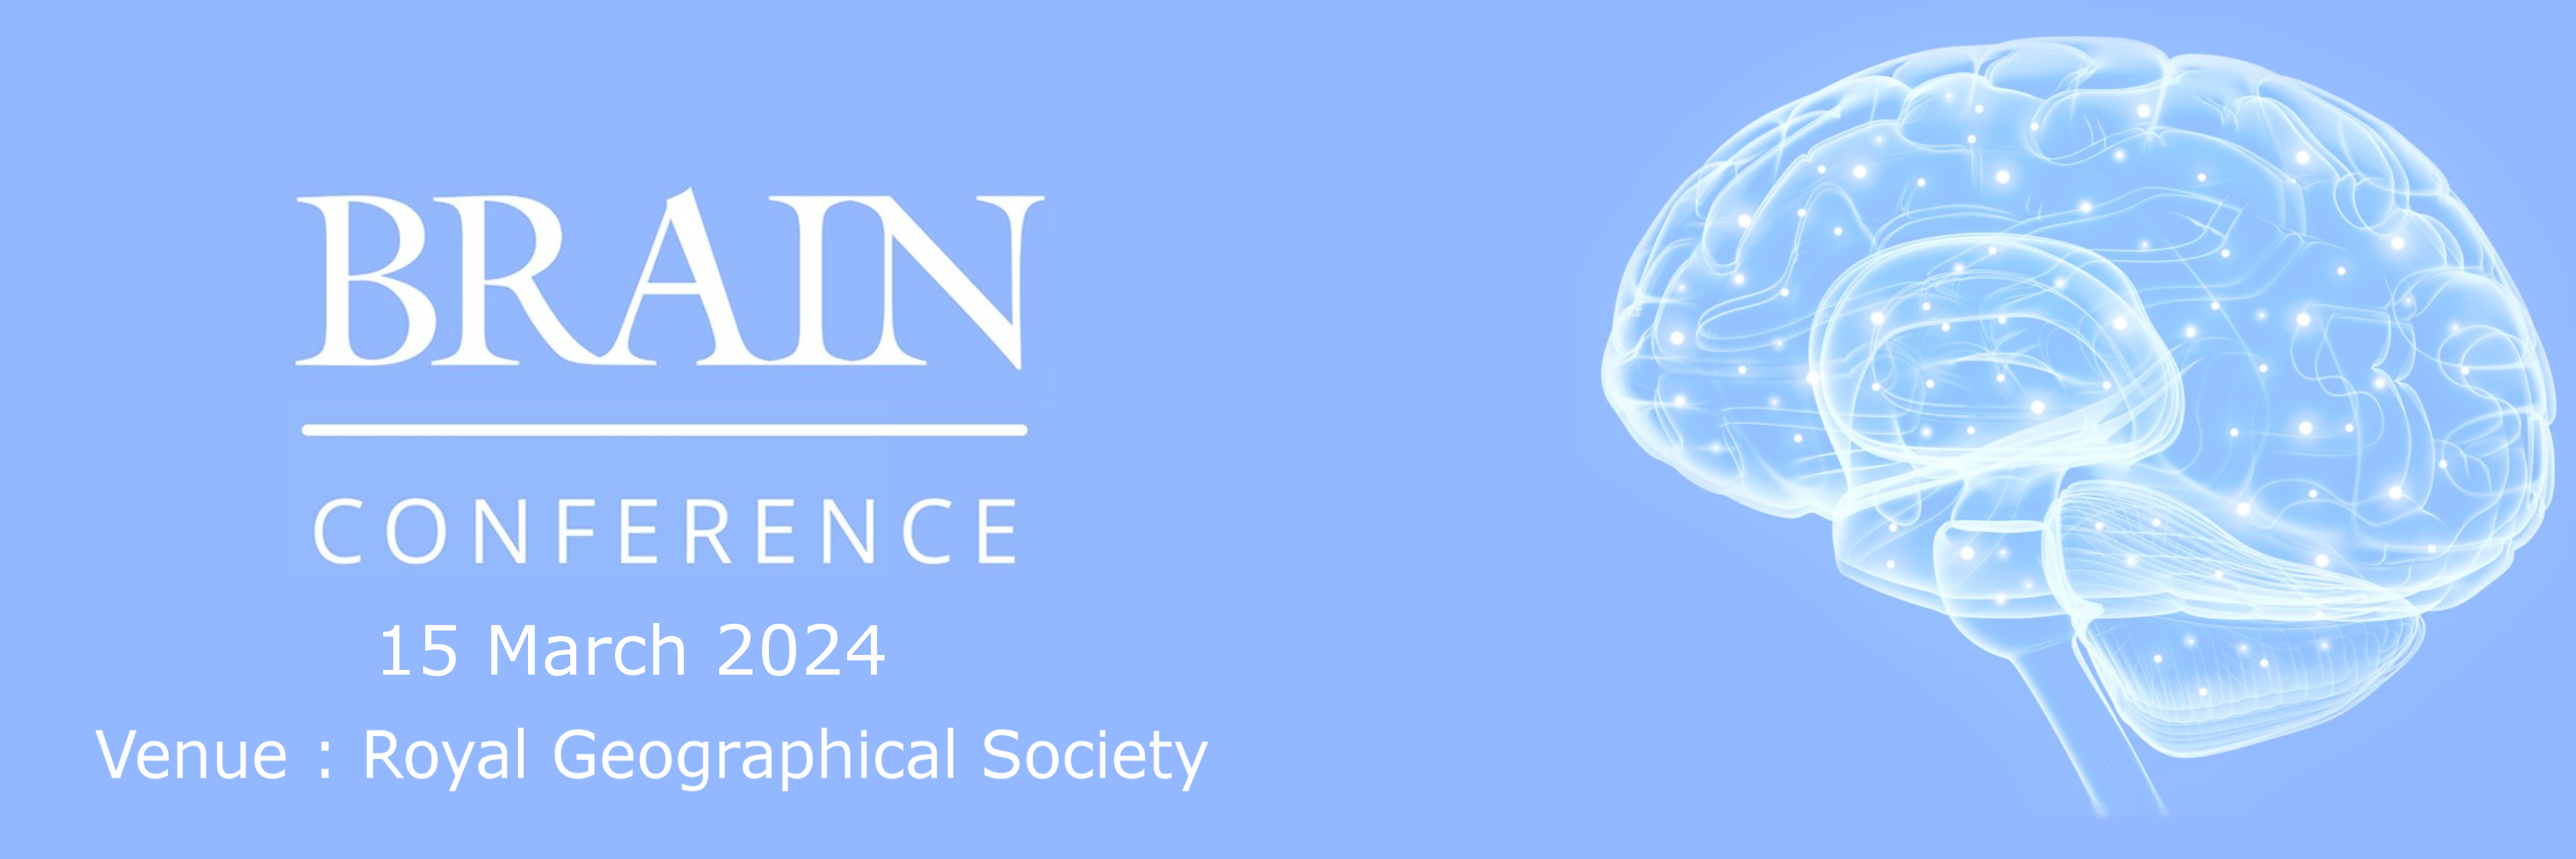 Brain conference logo